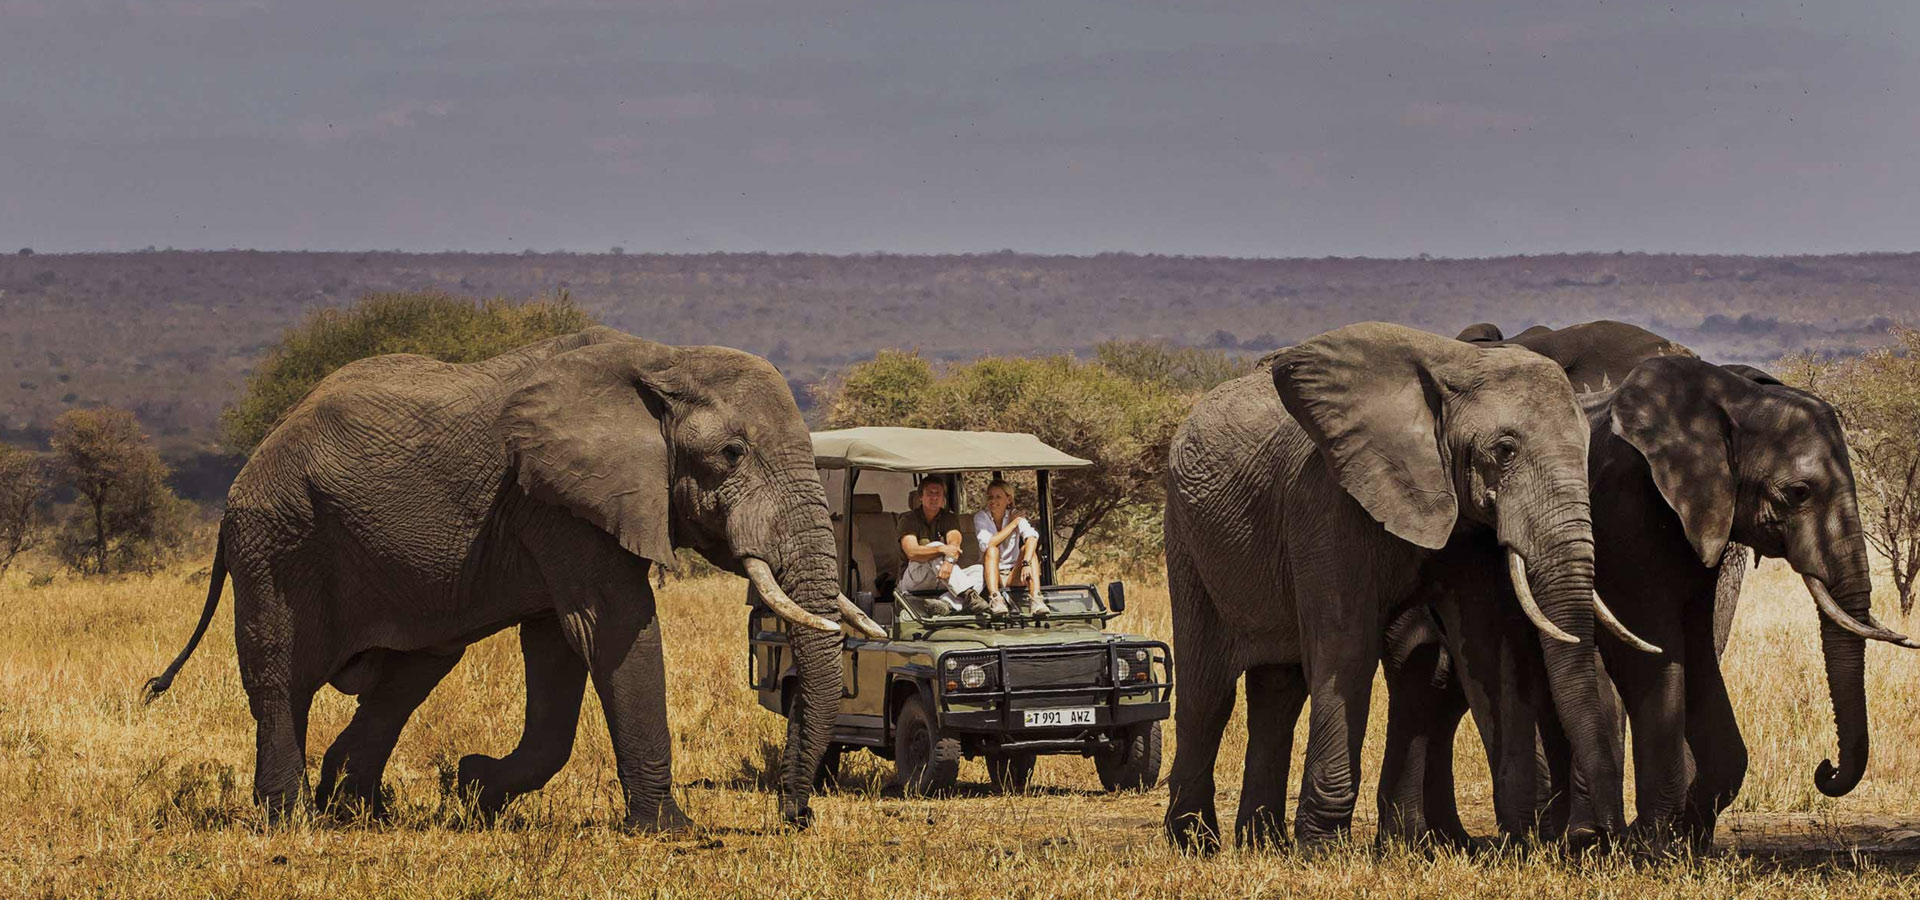 Tanzania Safari Facts